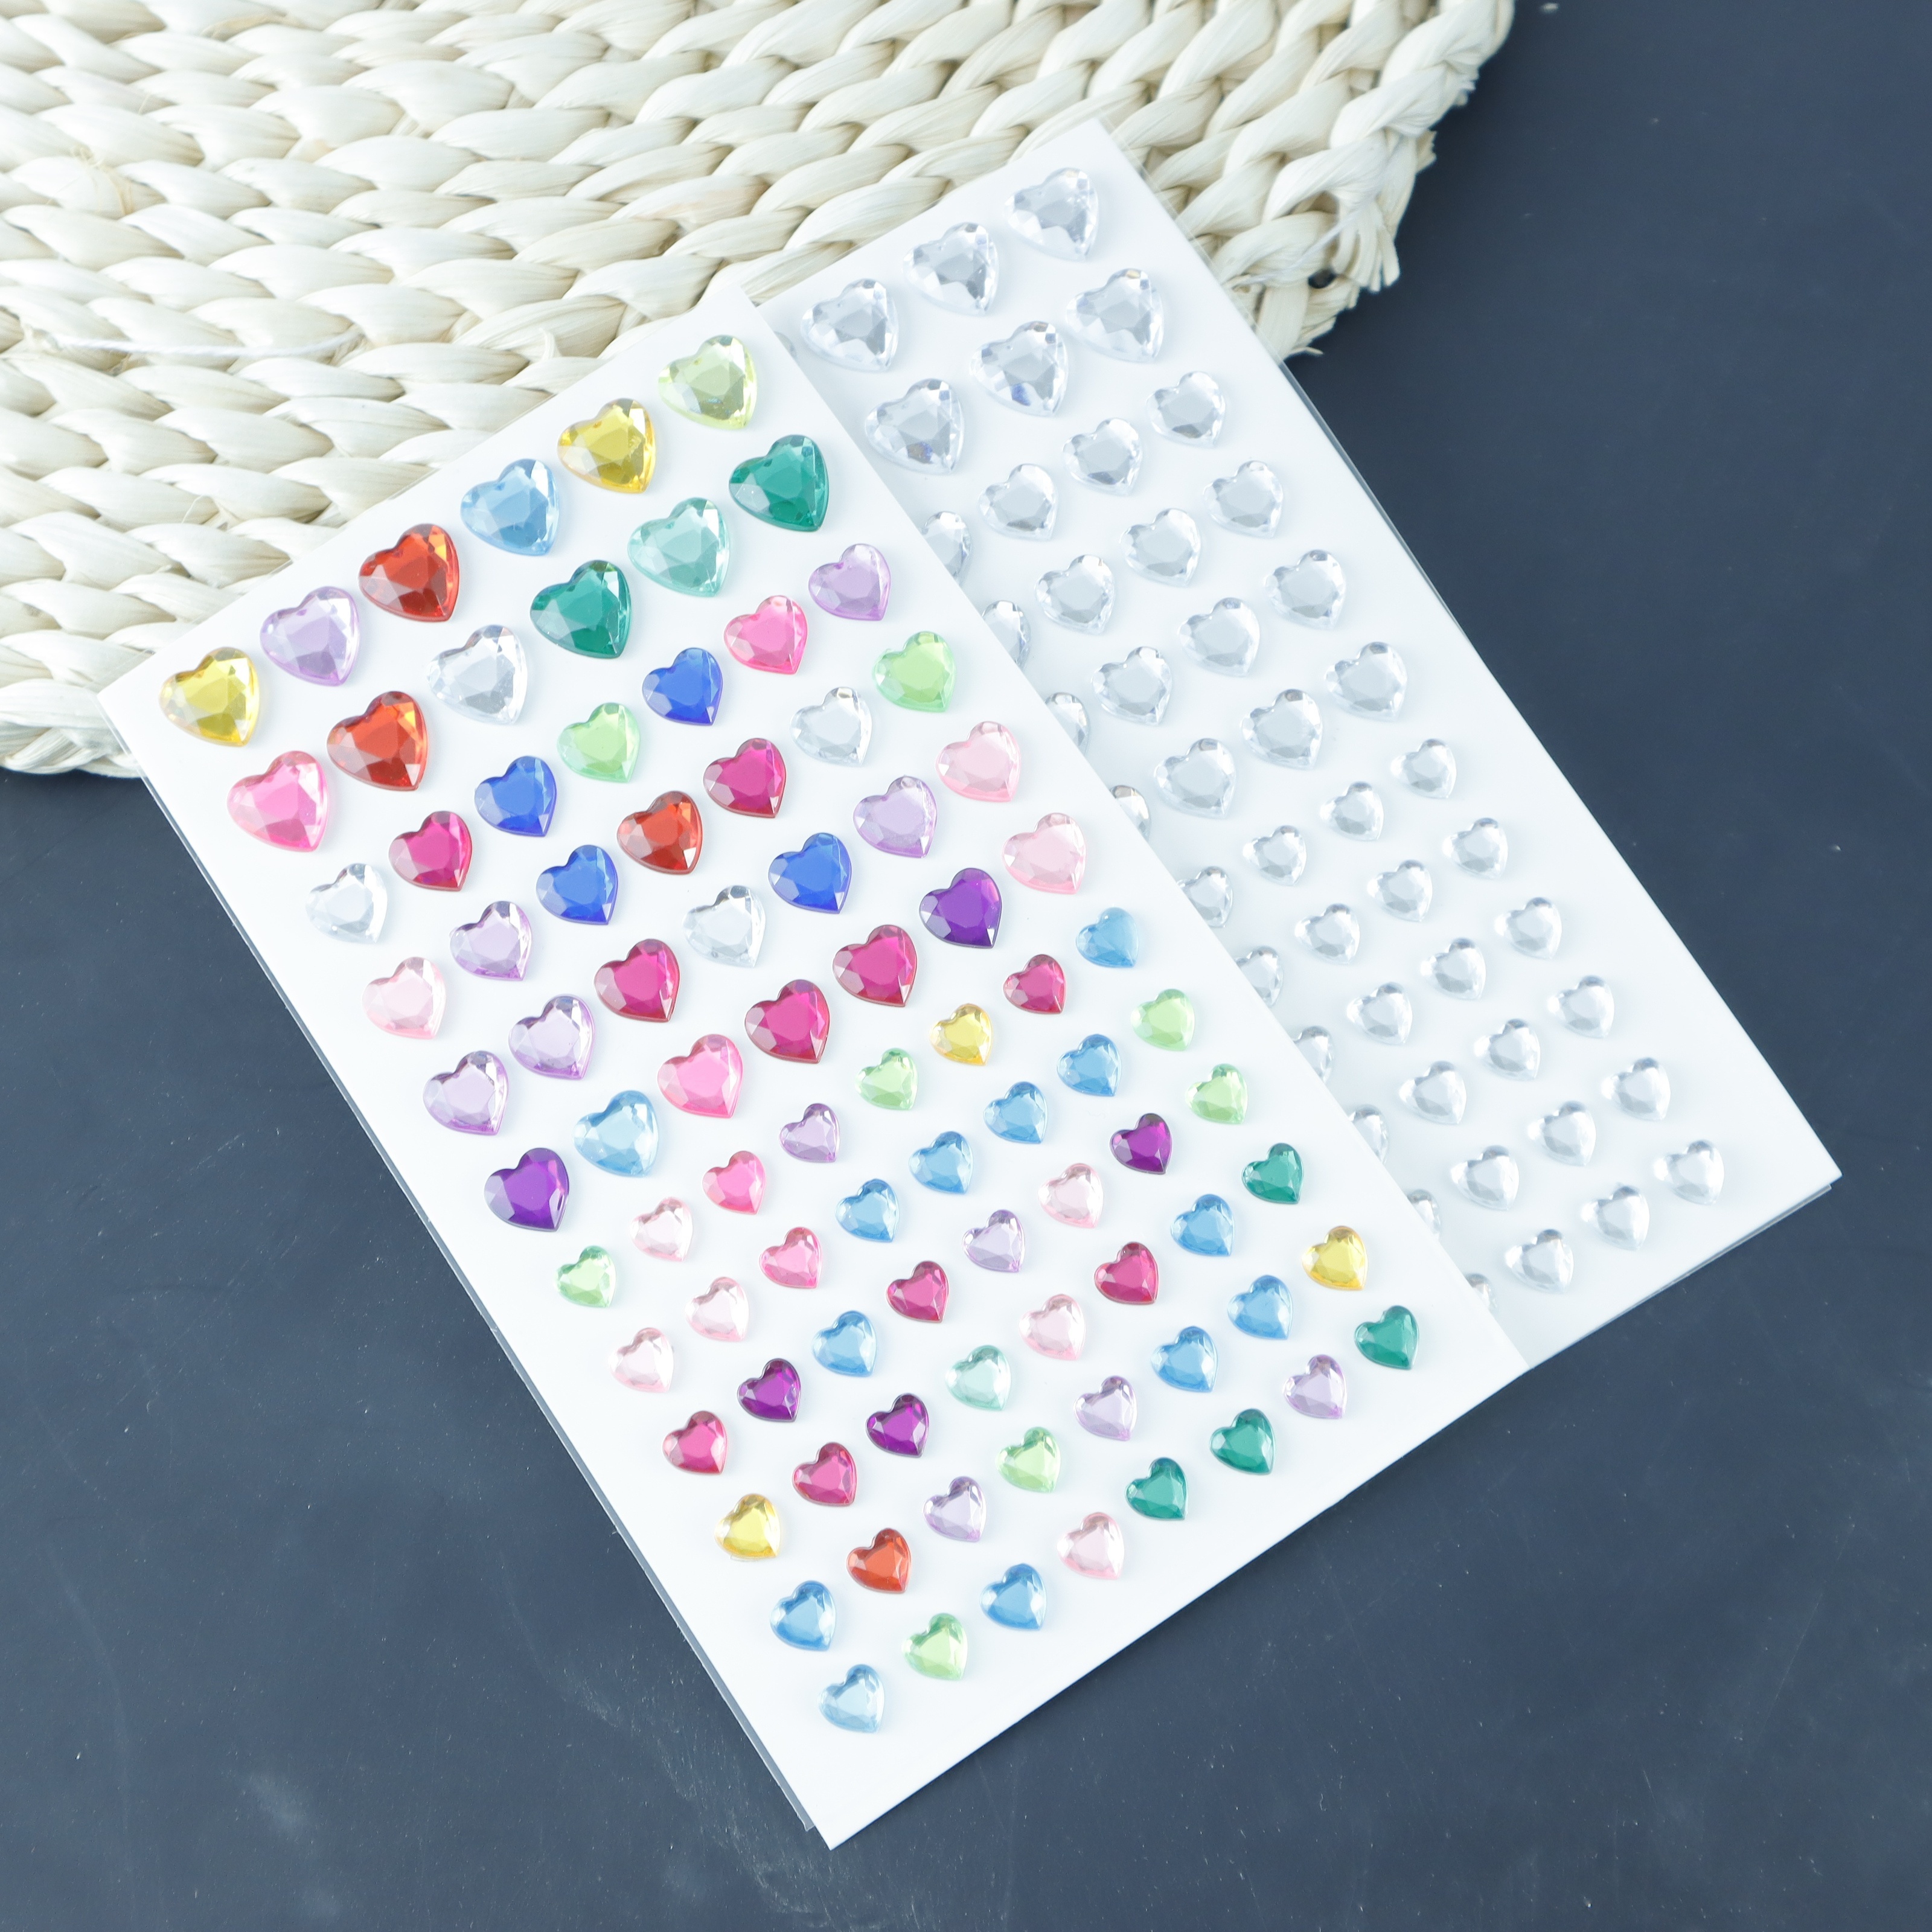  2774pcs Gem Stickers Jewels for Crafts - Self Adhesive  Rhinestone Jewel Stickers, Stick on Gems Rhinestones for Crafts, Acrylic  Bling Heart Stickers, Craft Supplies for Kids